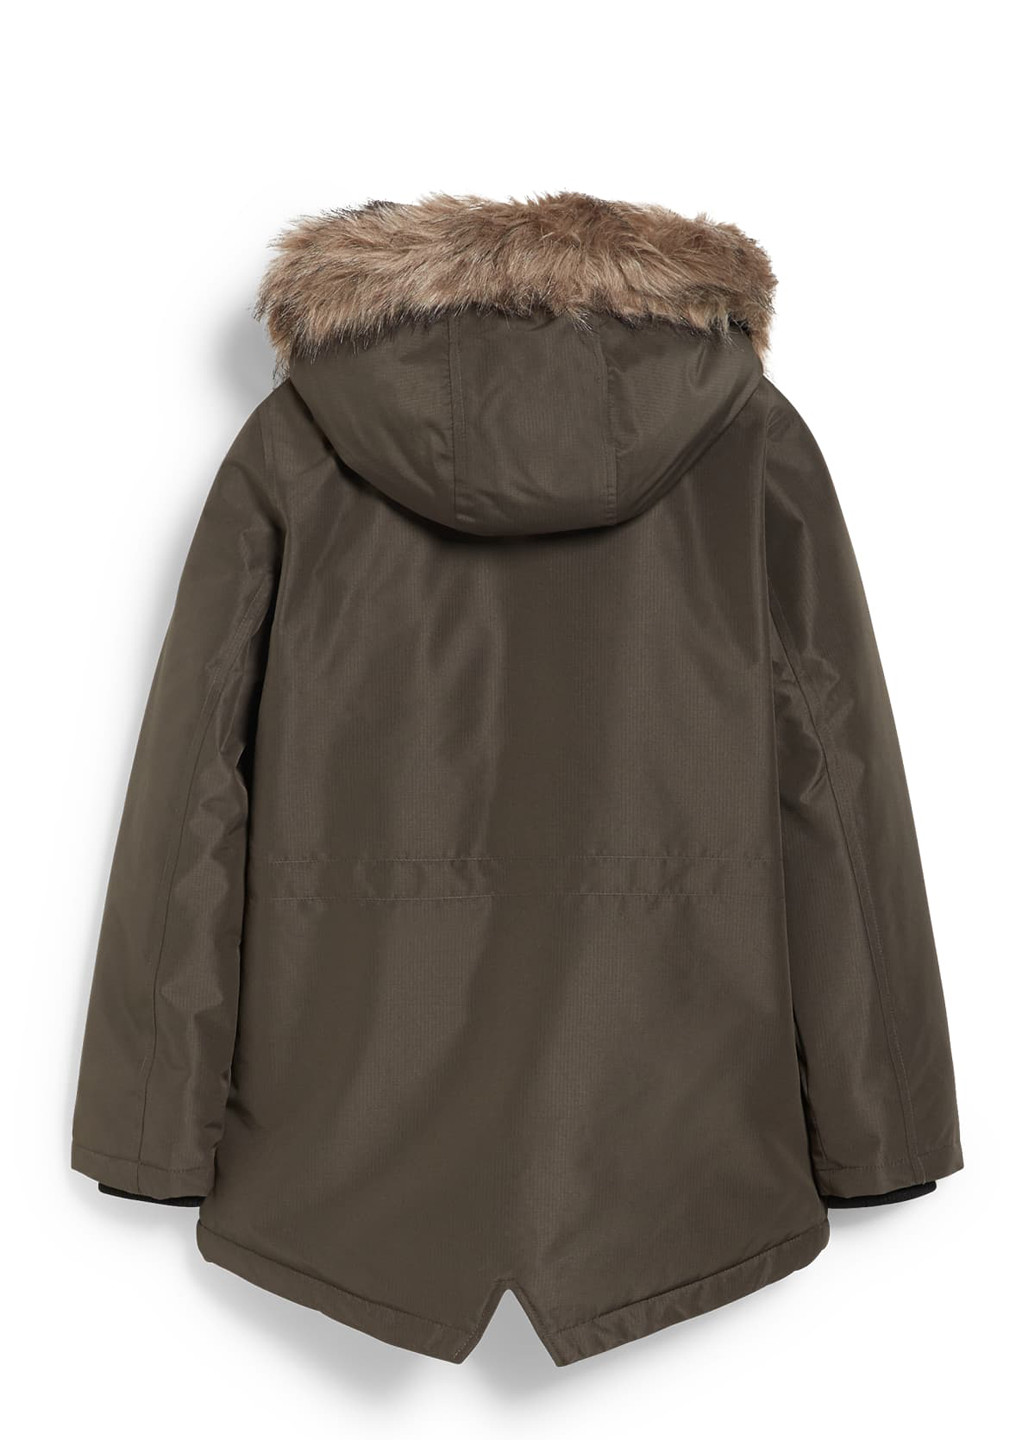 Оливковая (хаки) зимняя куртка C&A